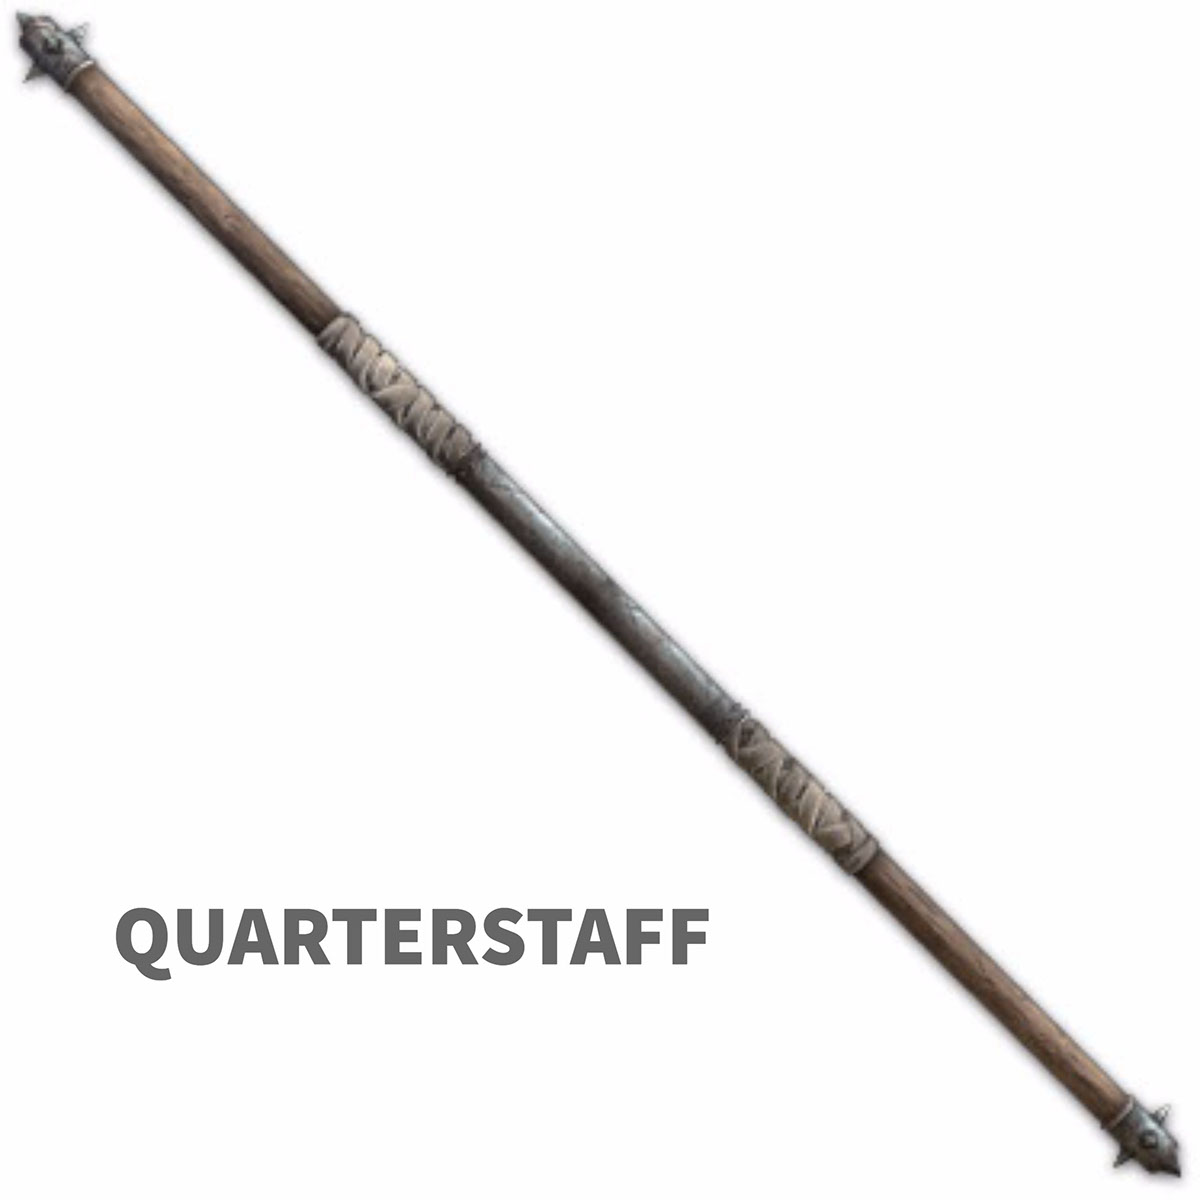 Quarterstaff